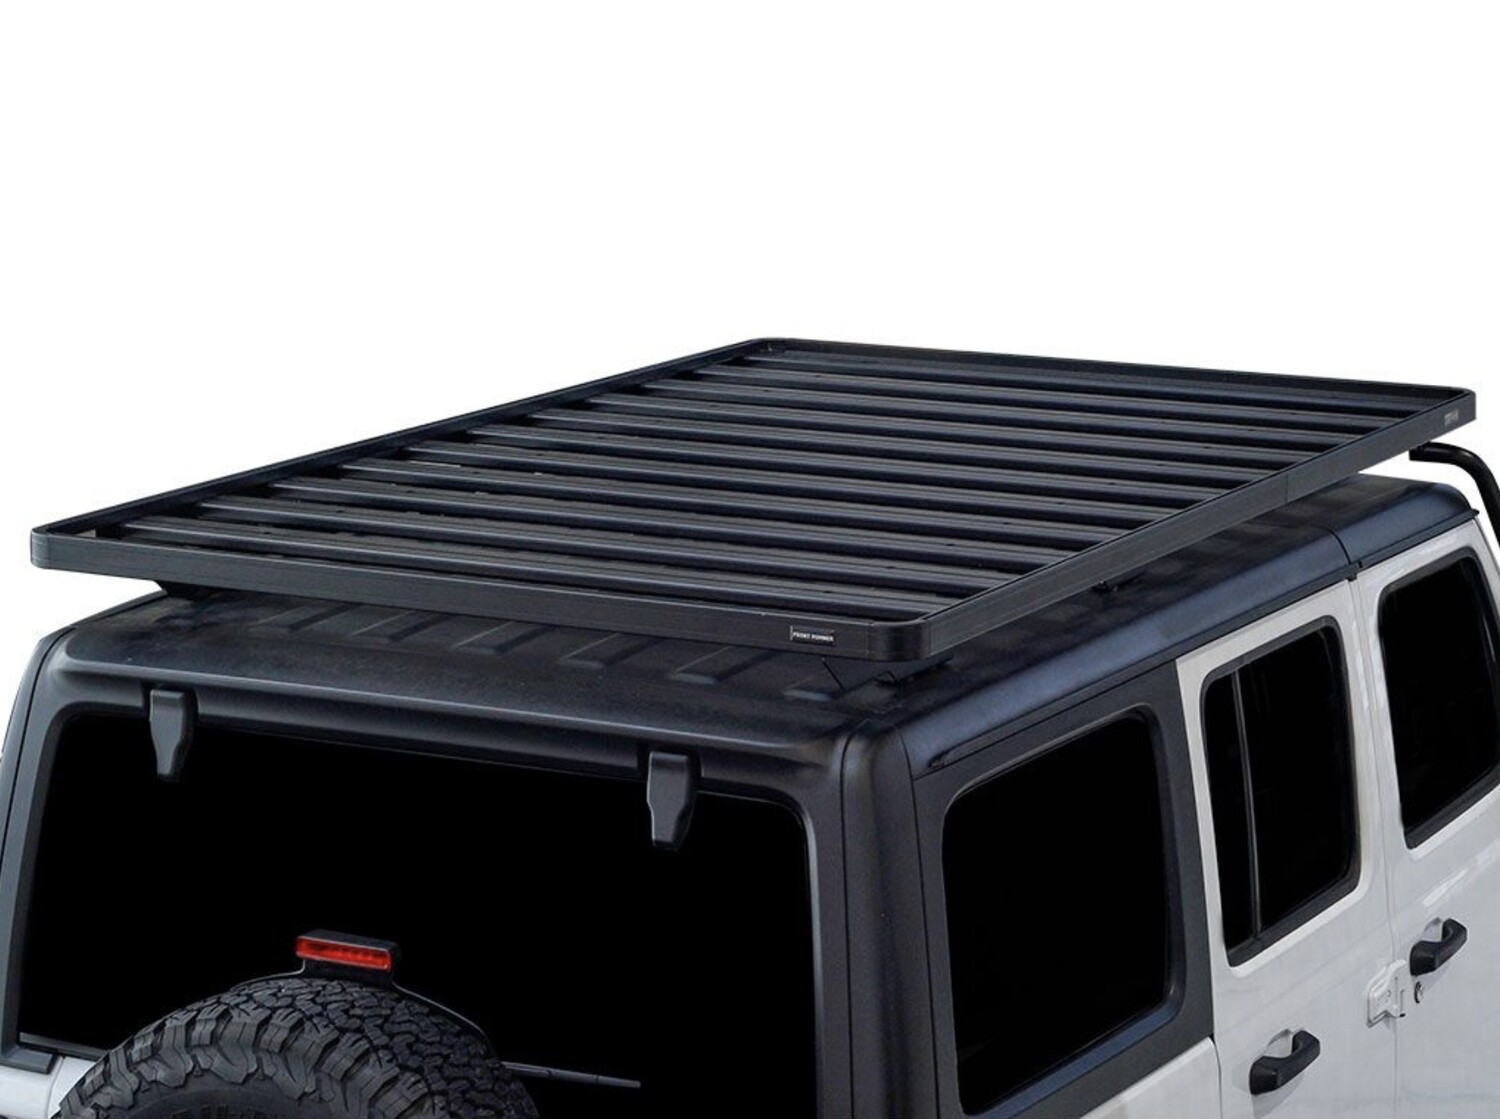 Jeep Wrangler JL 4 Door (2018-Current) Extreme Slimline II Roof Rack Kit - By Front Runner